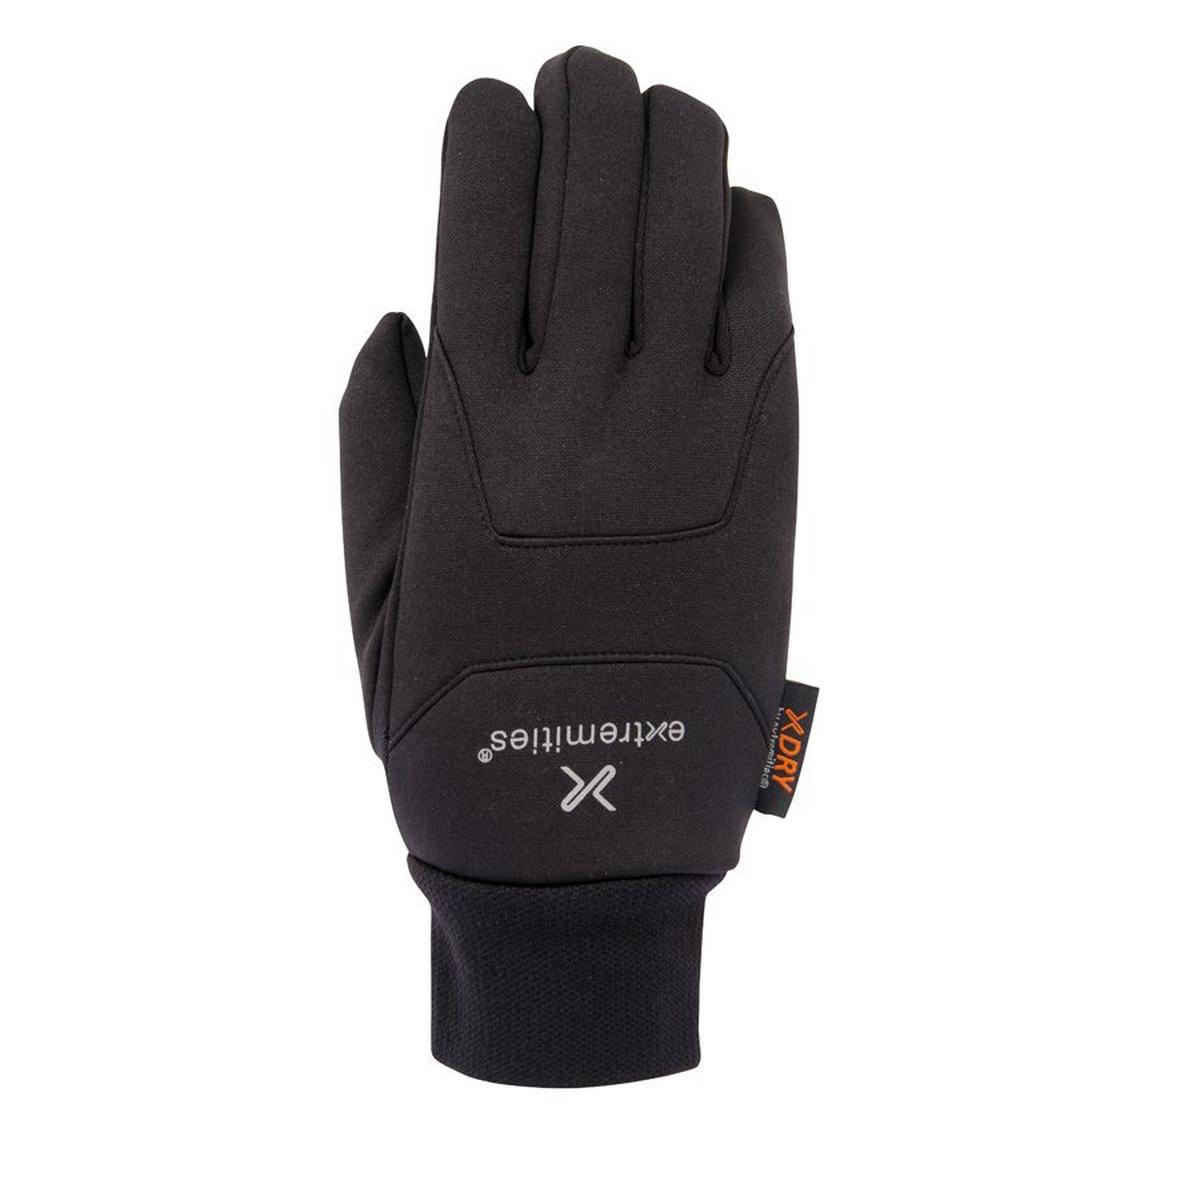 Extremities Waterproof Sticky Power Liner Glove - Black